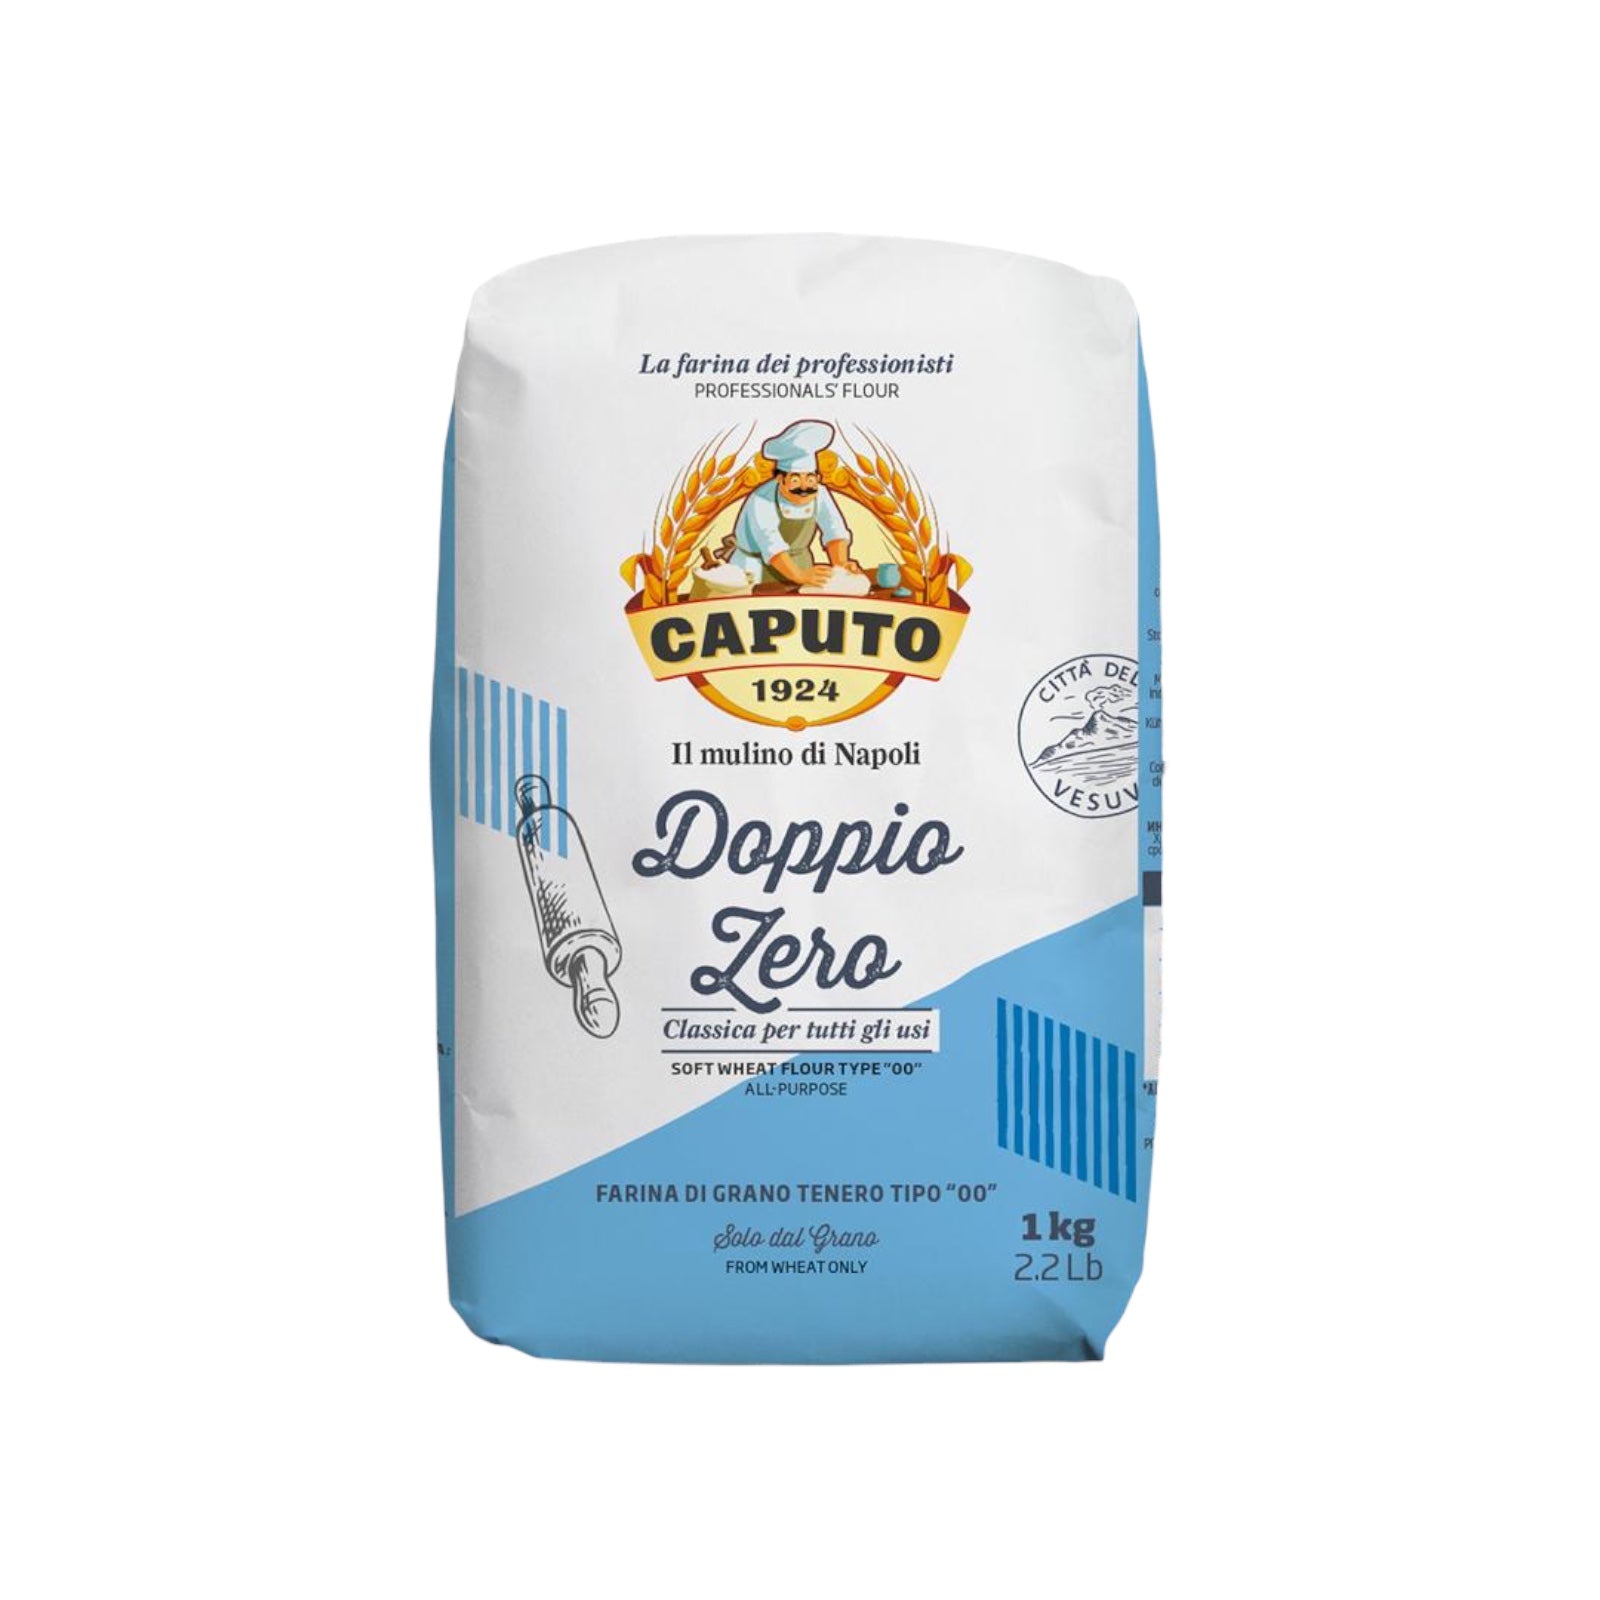 Double Zero “00” Caputo Flour 2.2lb